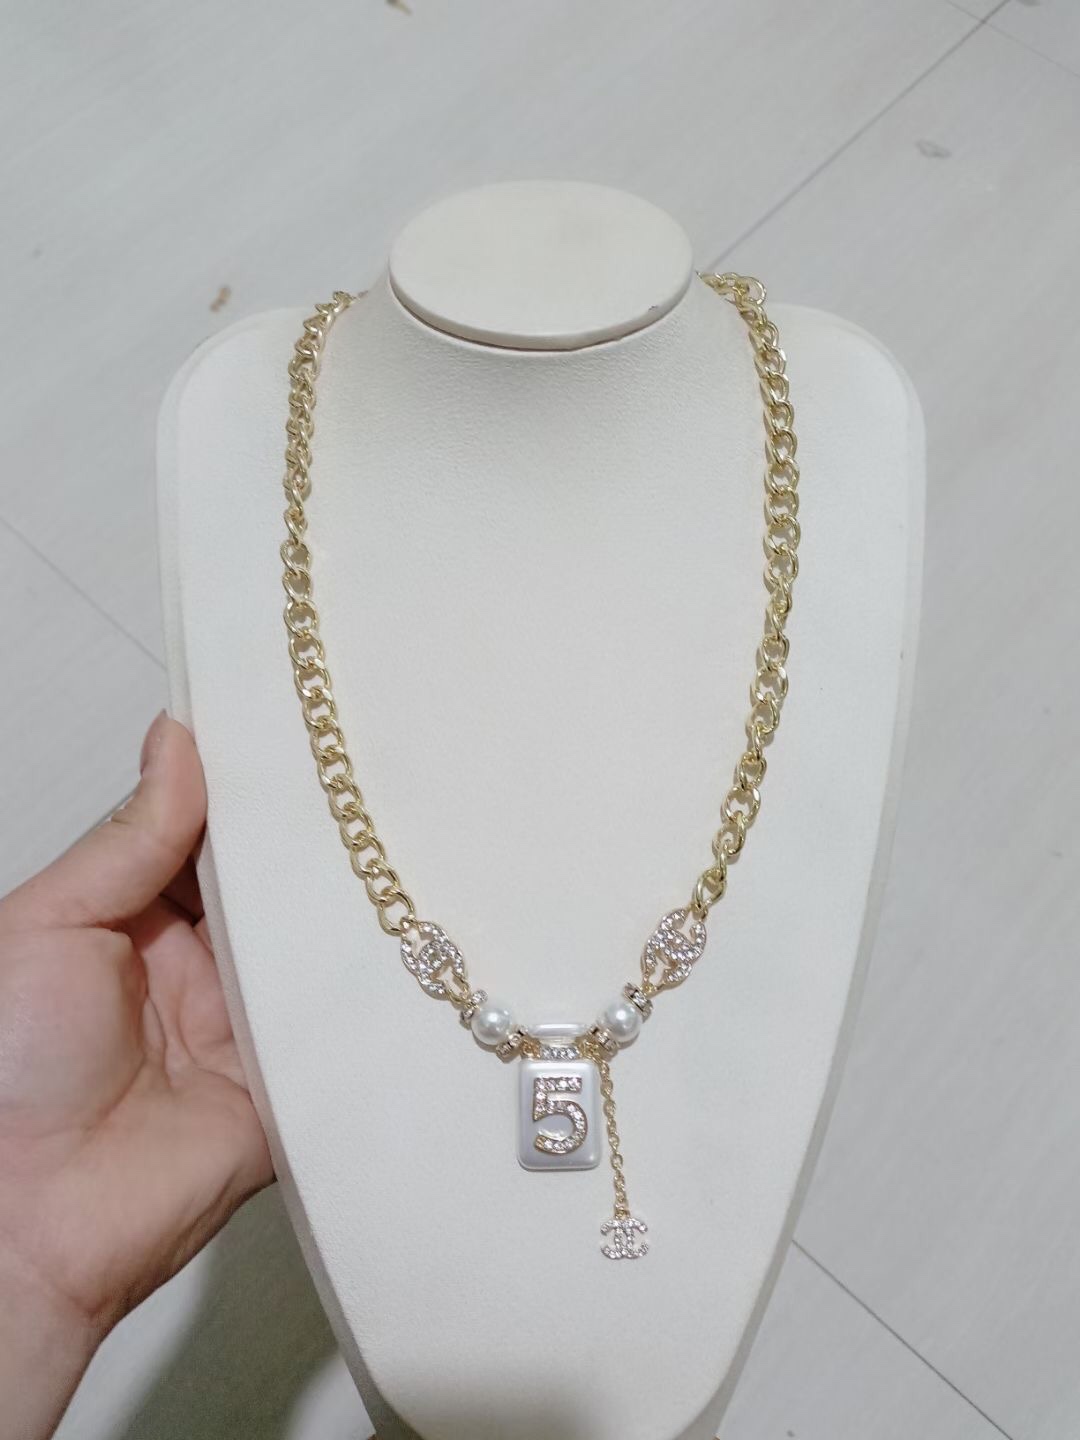 Chanel necklace baublebar 109143